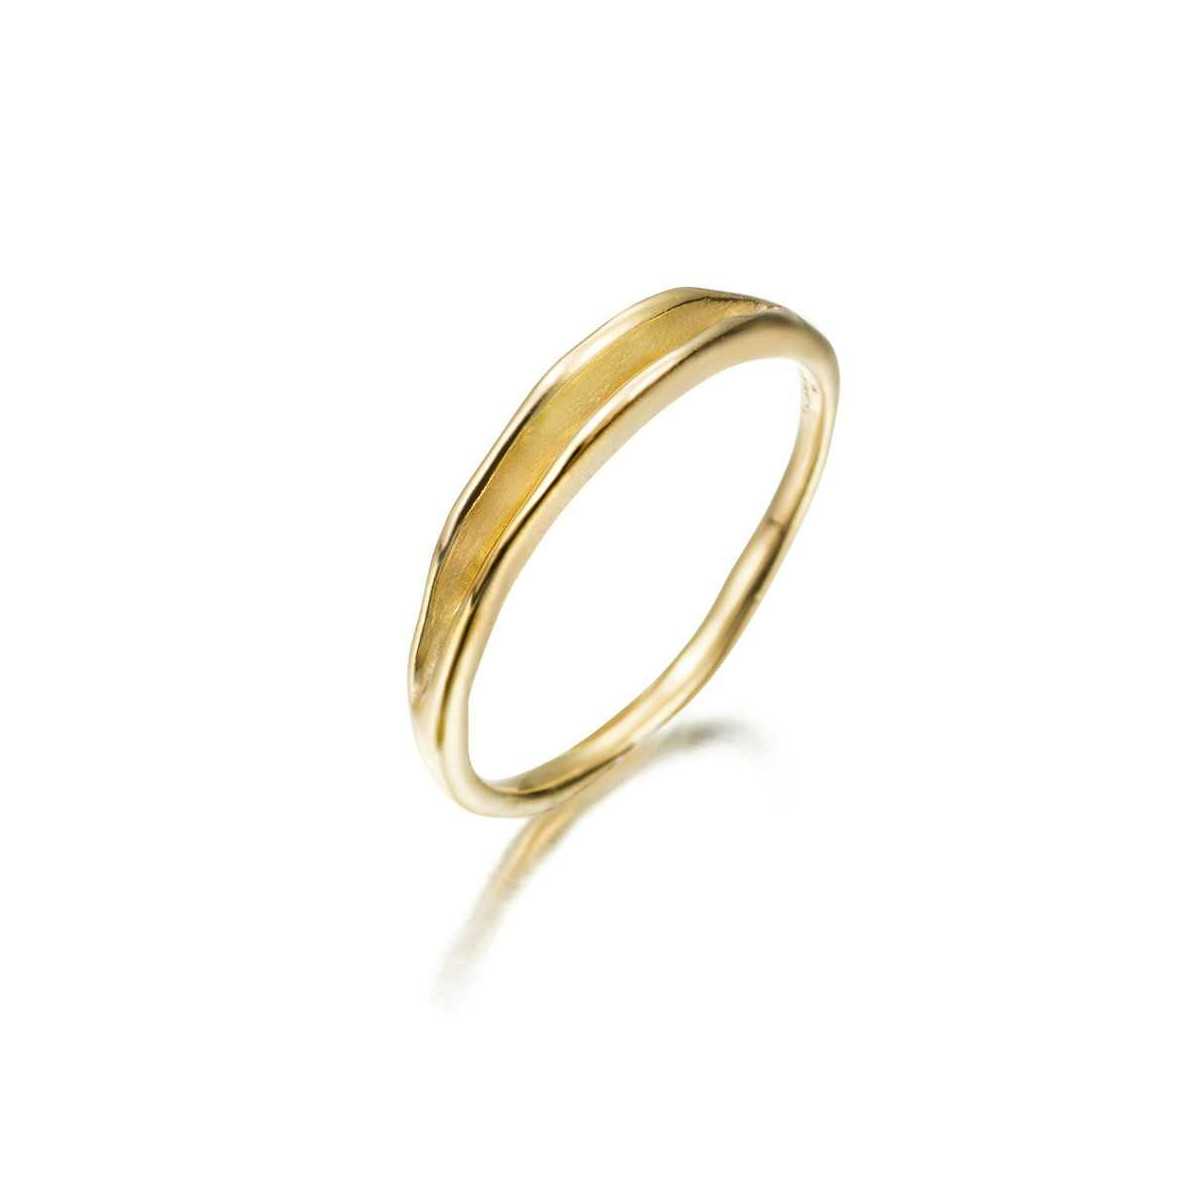 ODYSSEY Ring in Silver. 18k Gold Vermeil